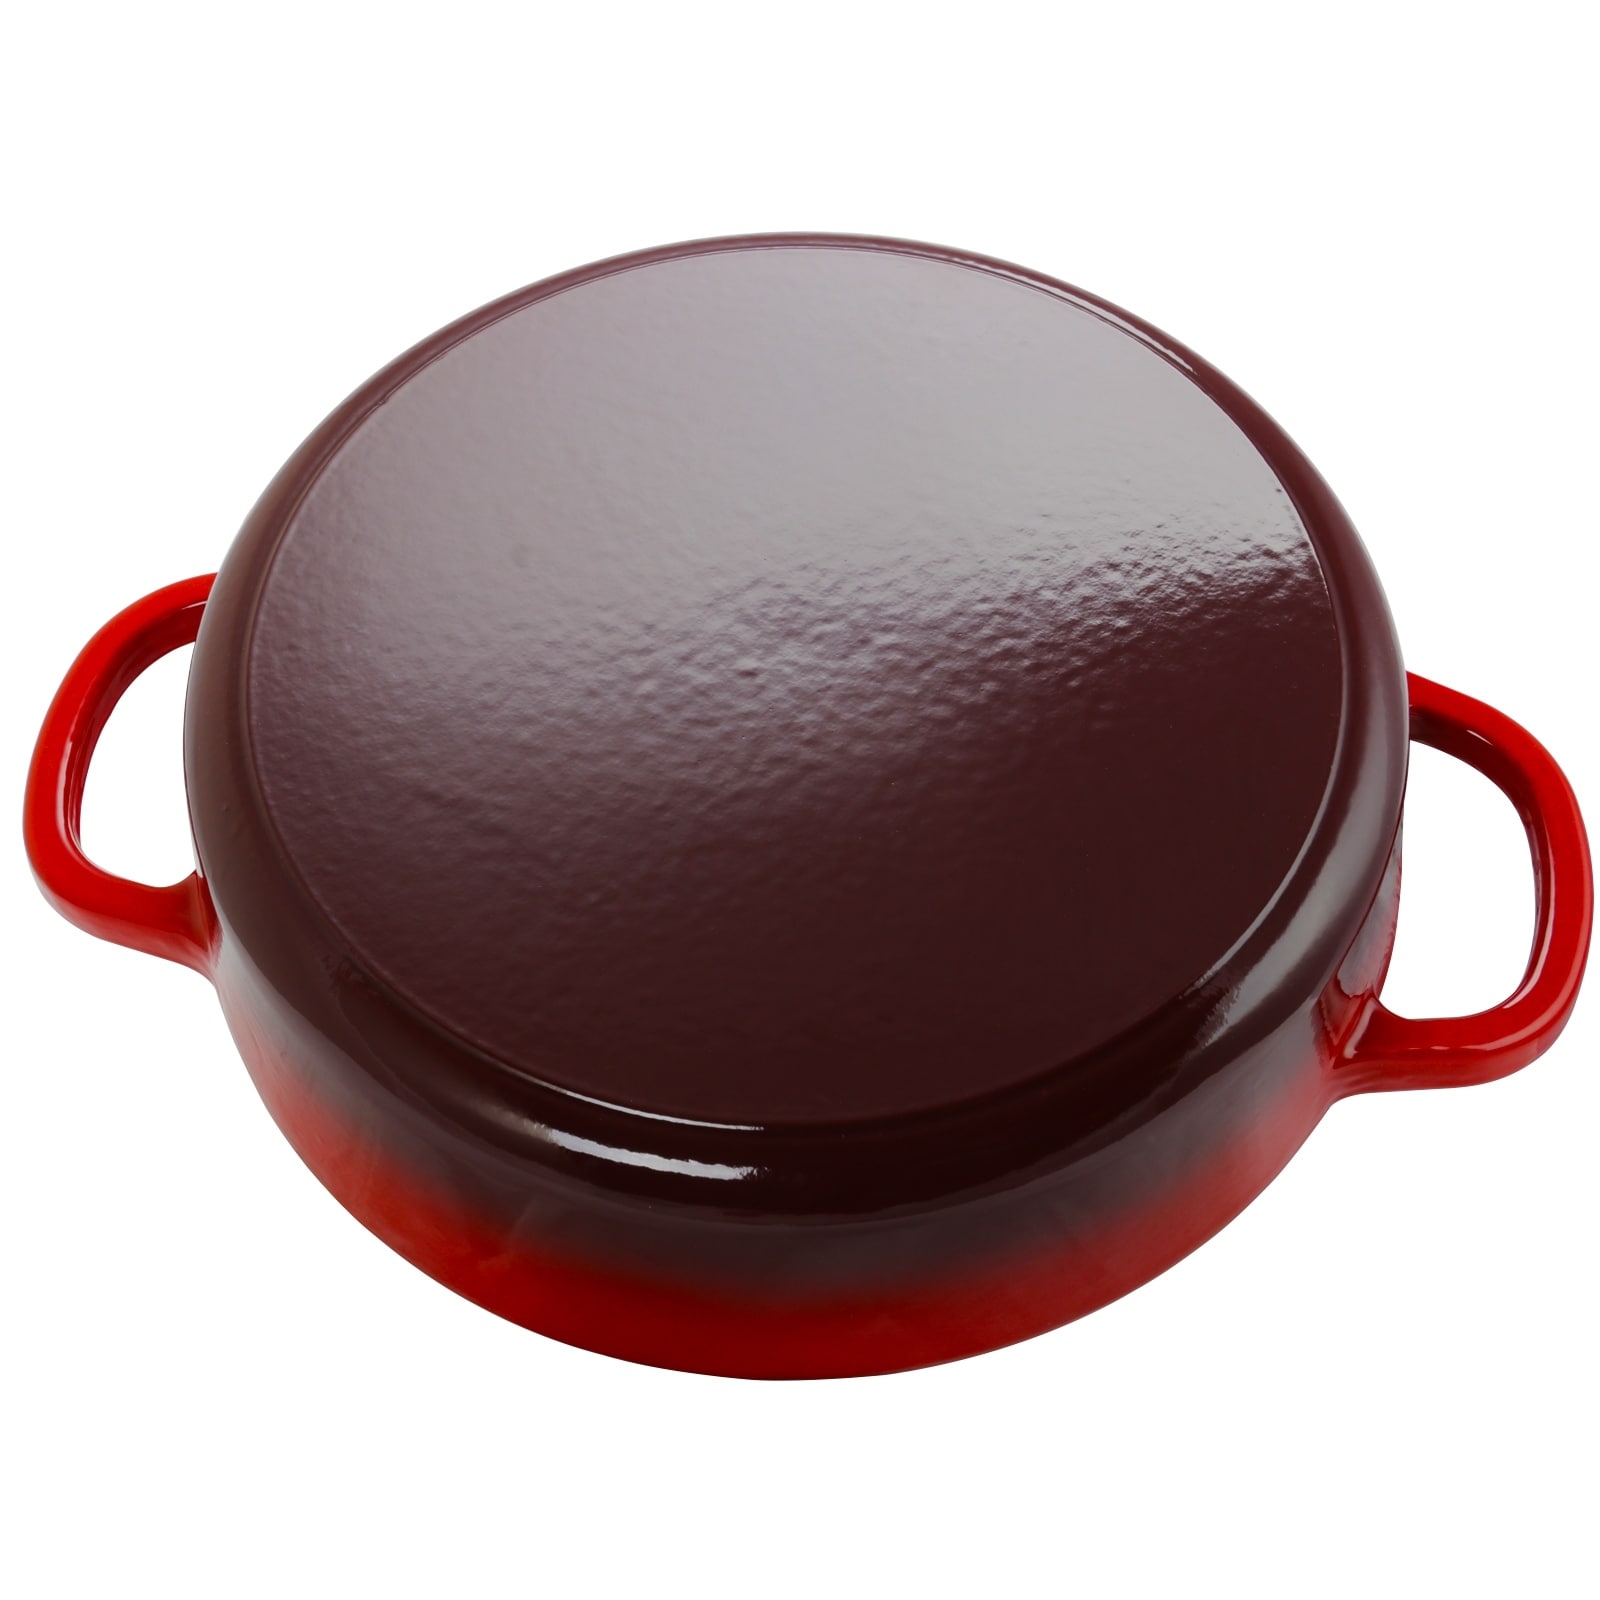 Crock Pot Artisan 5-Quart Braiser - Scarlet Red, 5 qt - Foods Co.